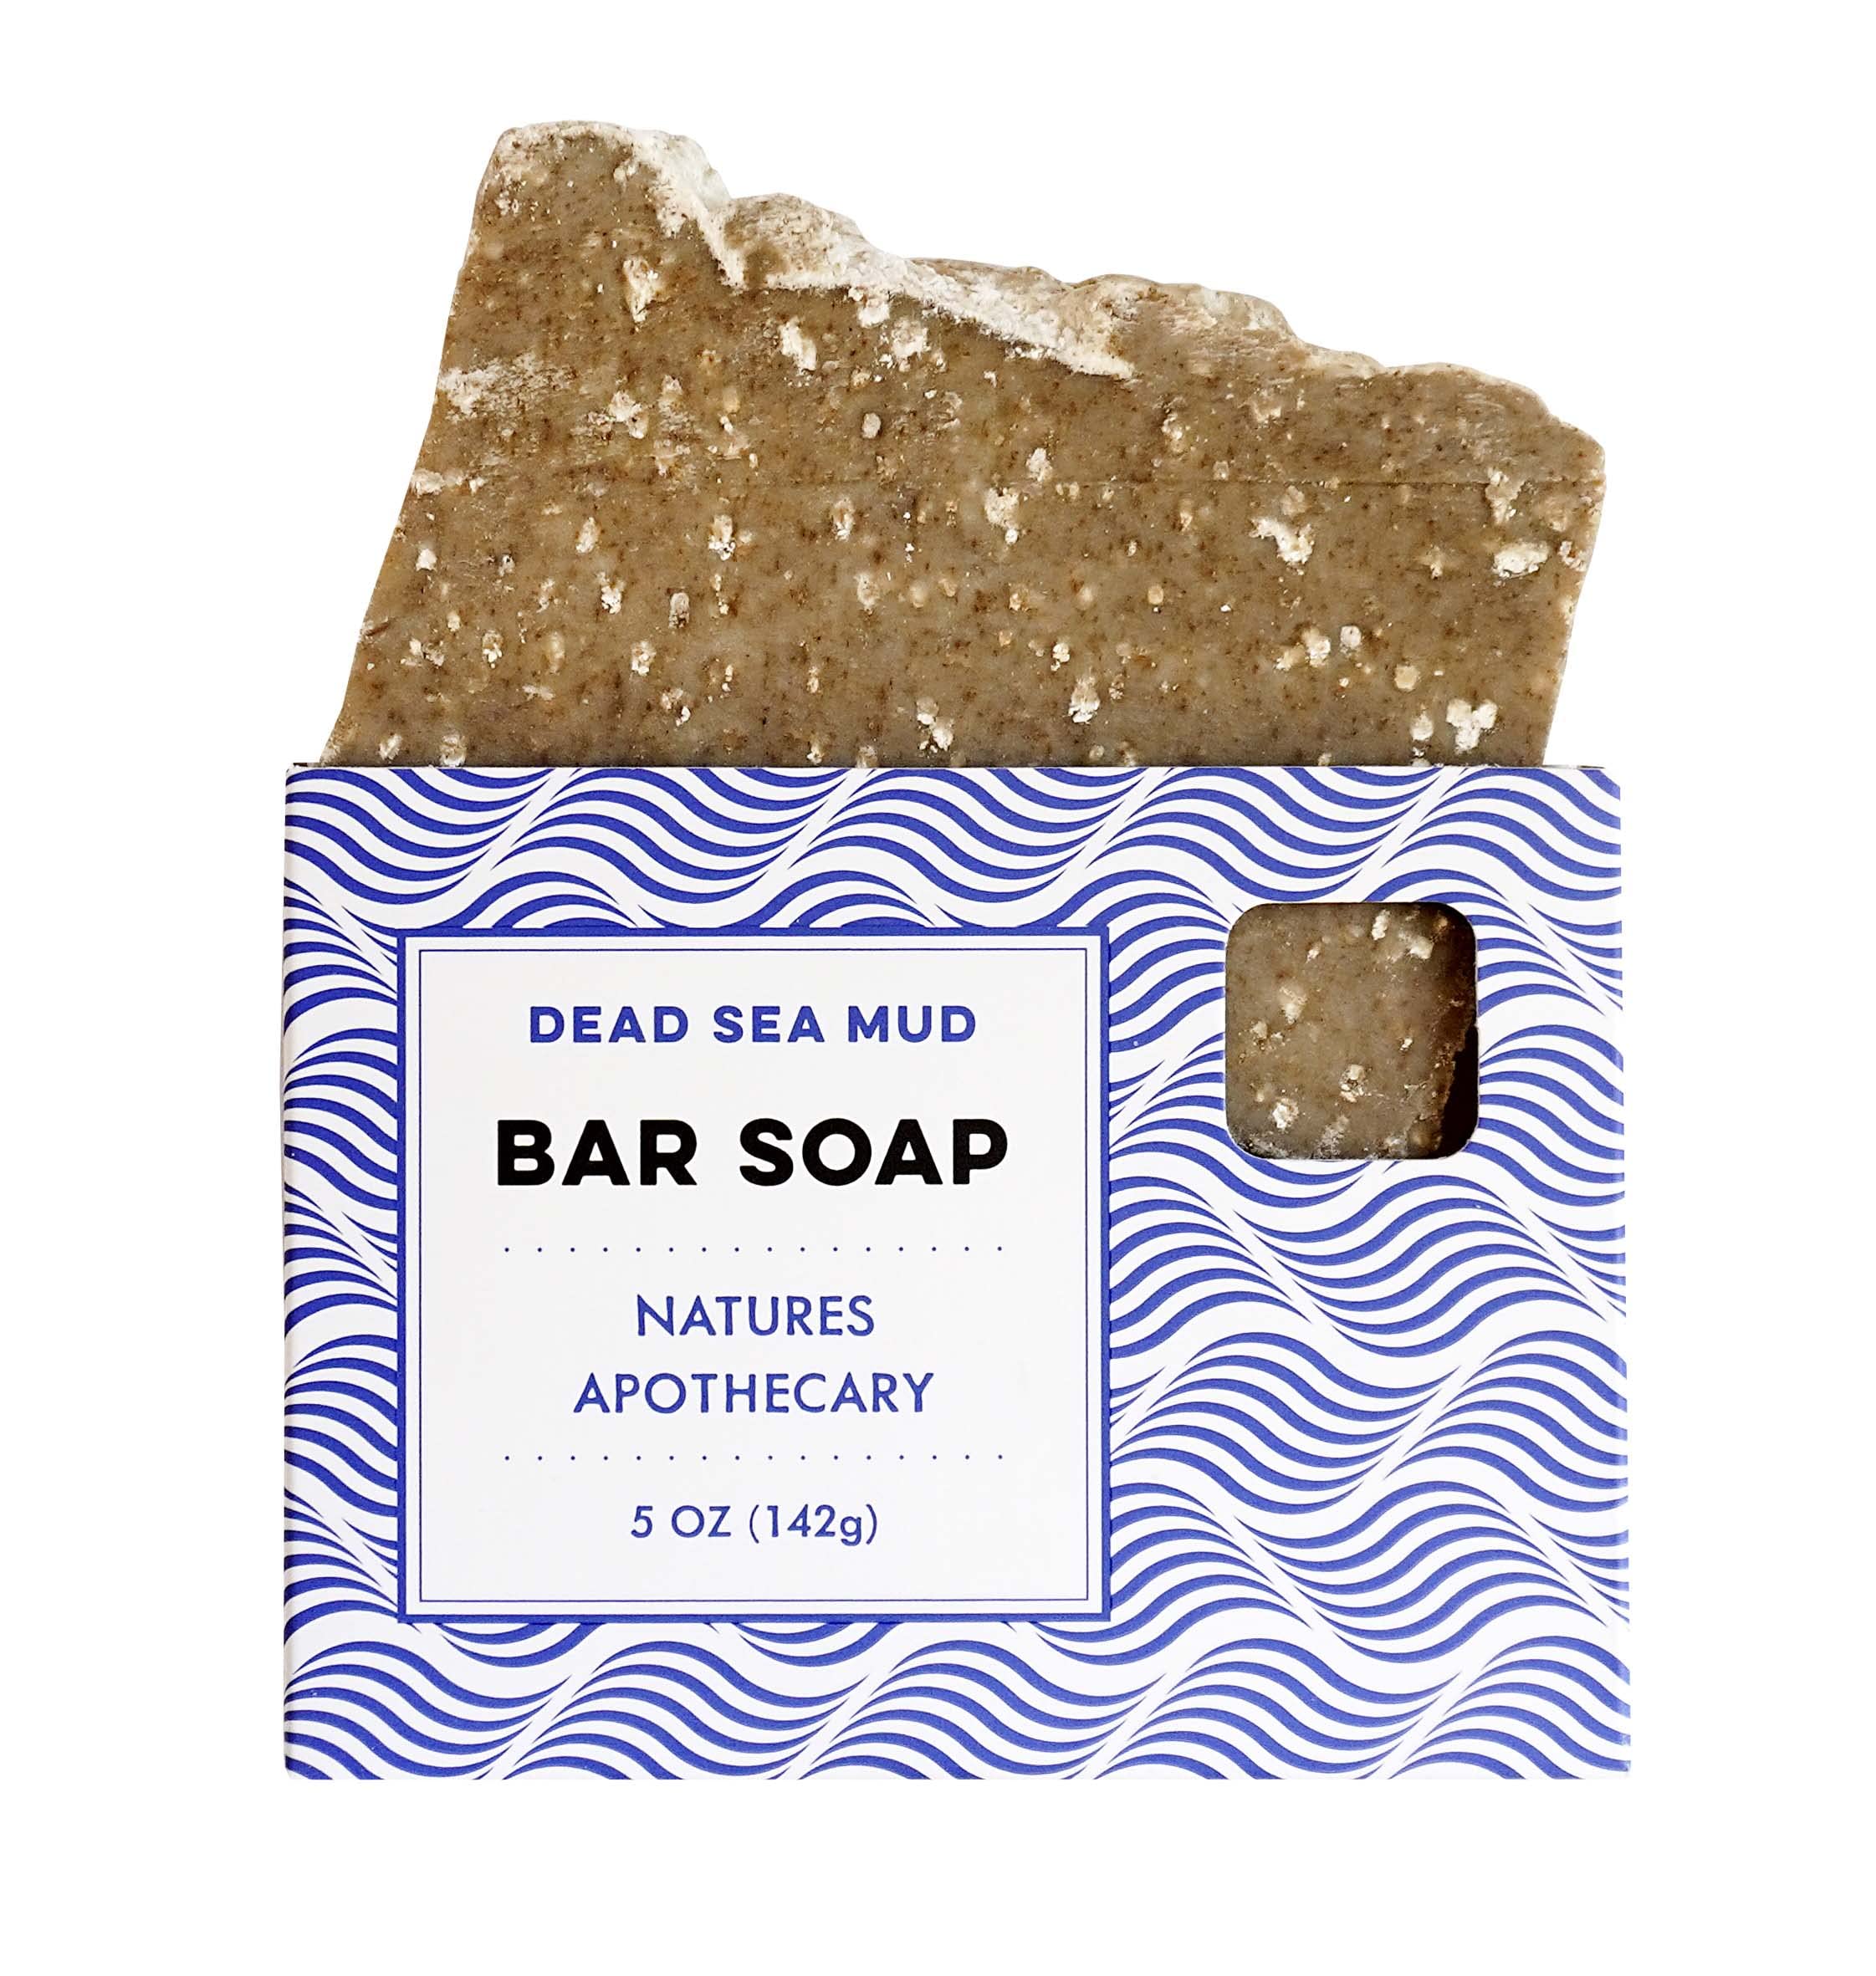 DAYSPA Body Basics Dead Sea Mud & Salt Premium Bar Soap - Cold-Processed Castile Soap - Eco-Friendly, Vegan, Hypoallergenic, All-Natural, Plant-Derived, Handmade in USA